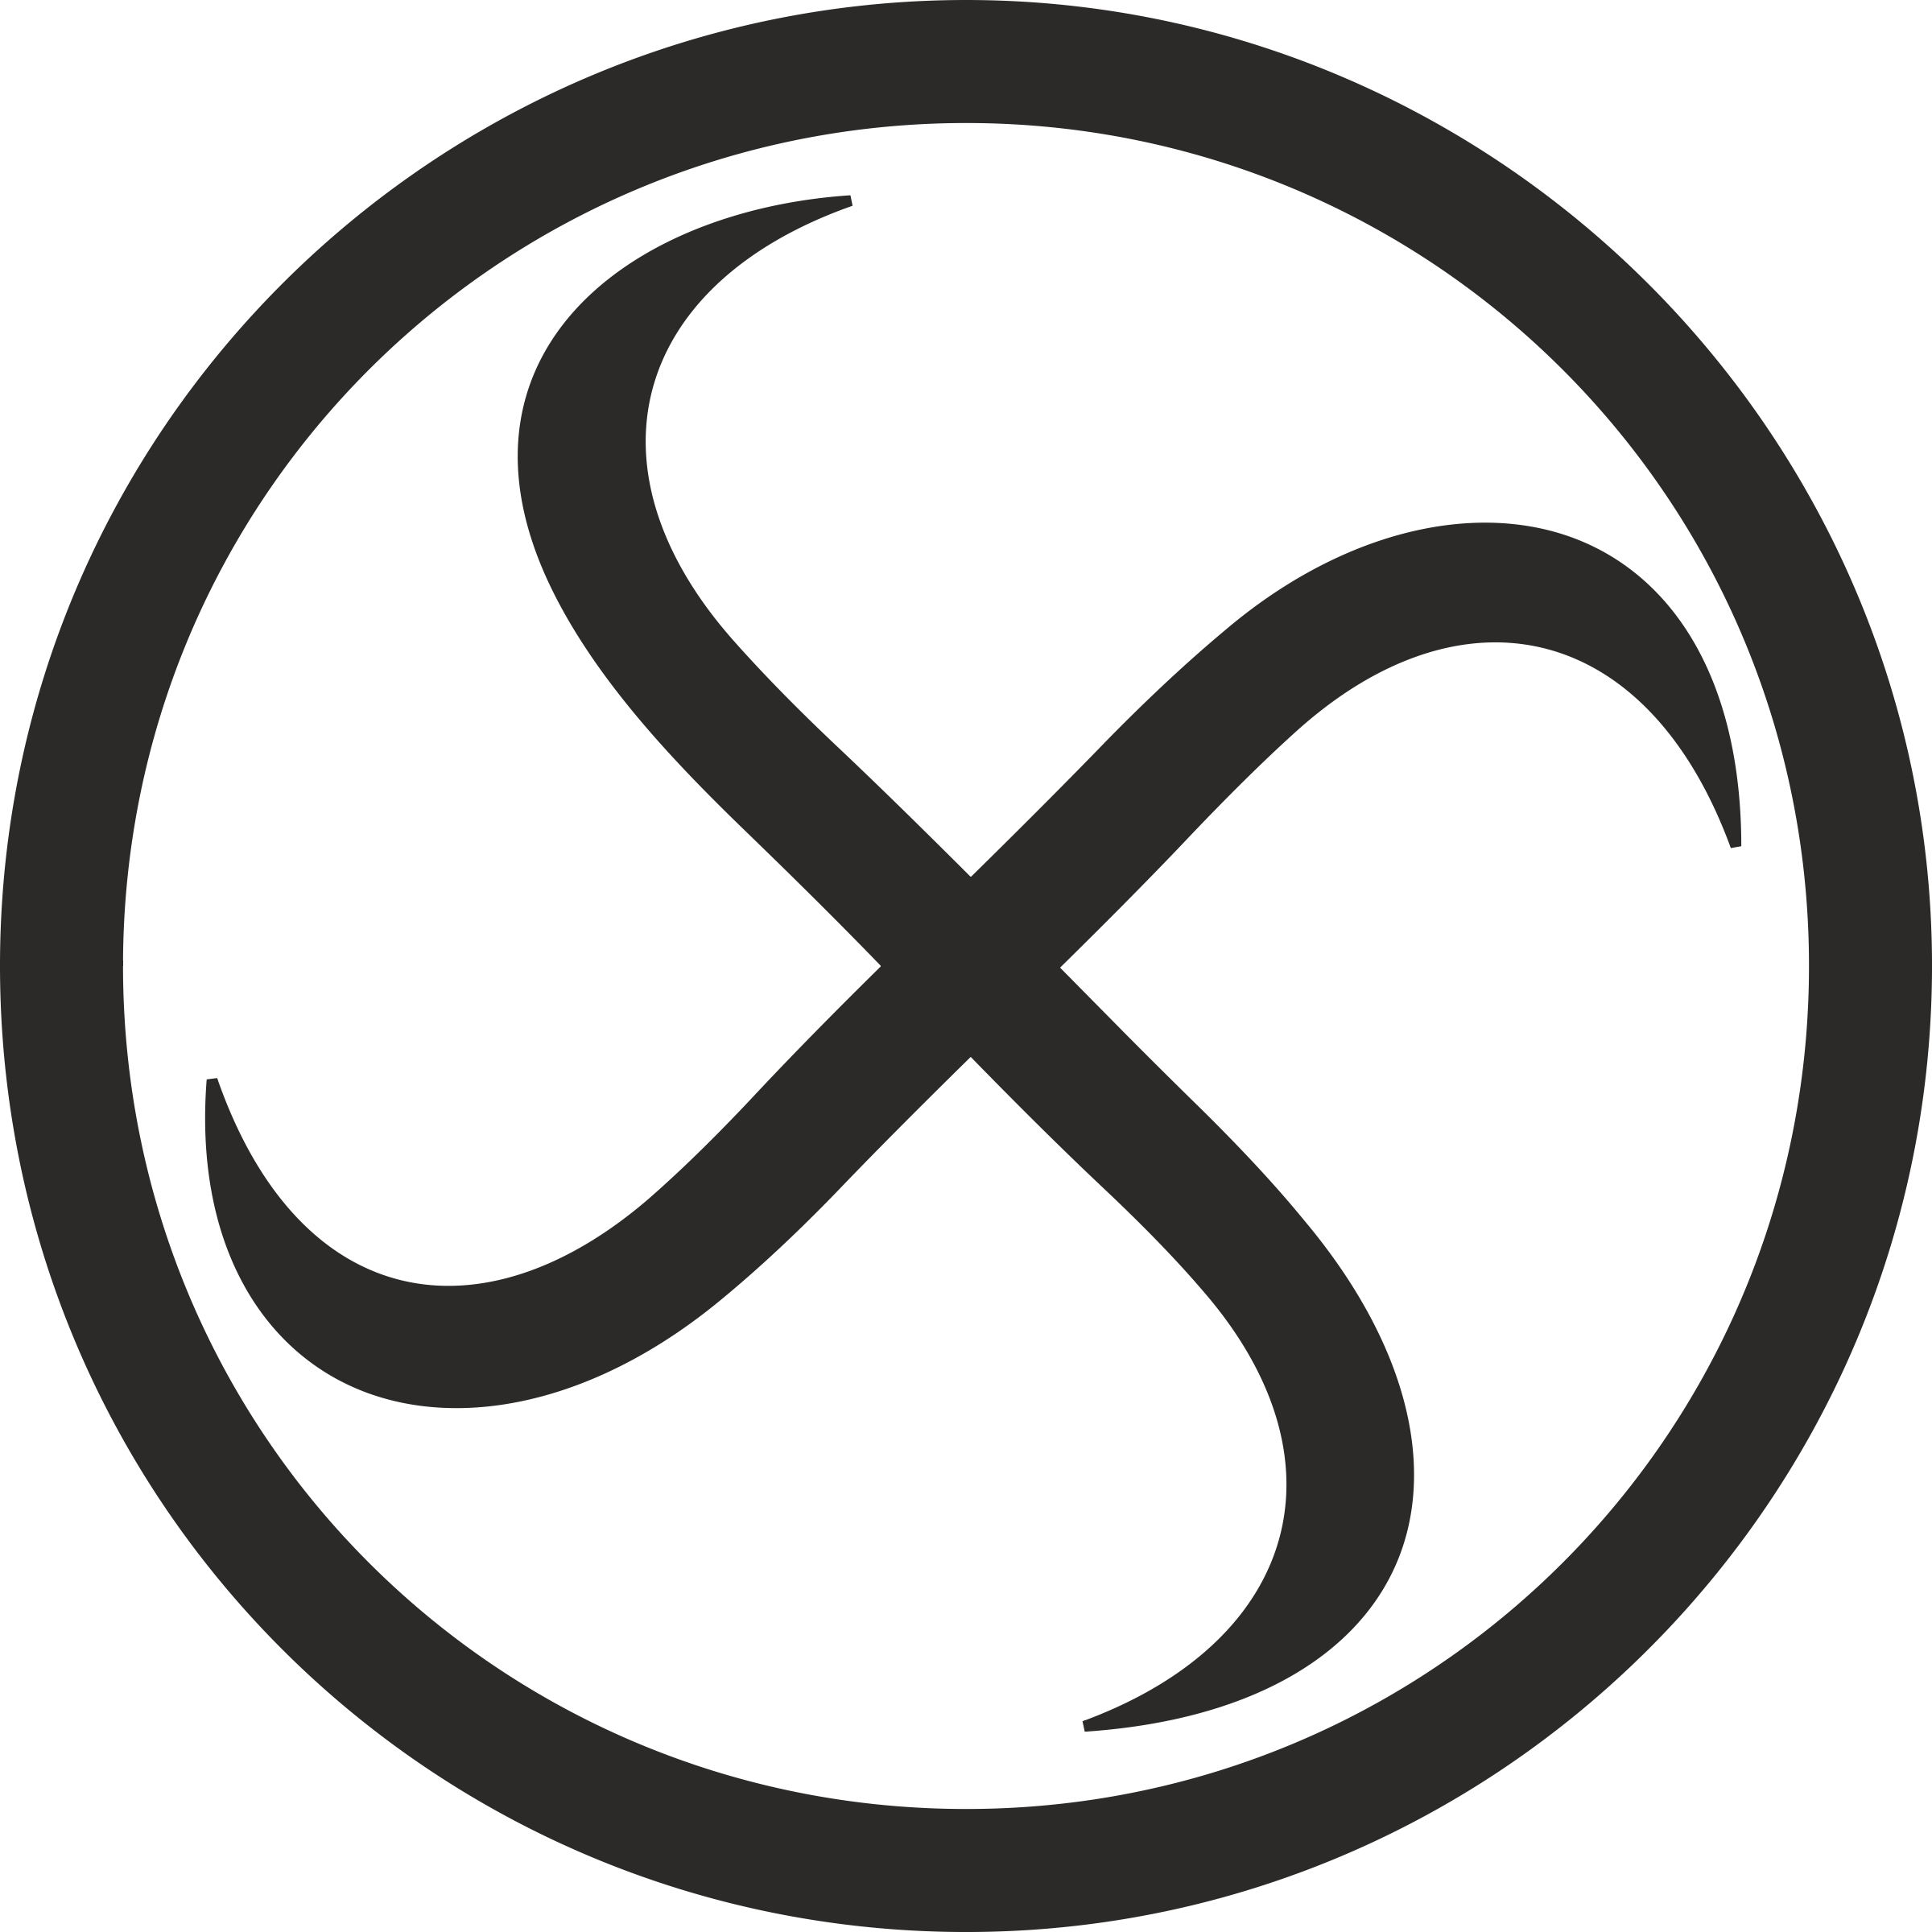 Swastika Encircled Rotating Left by alkon